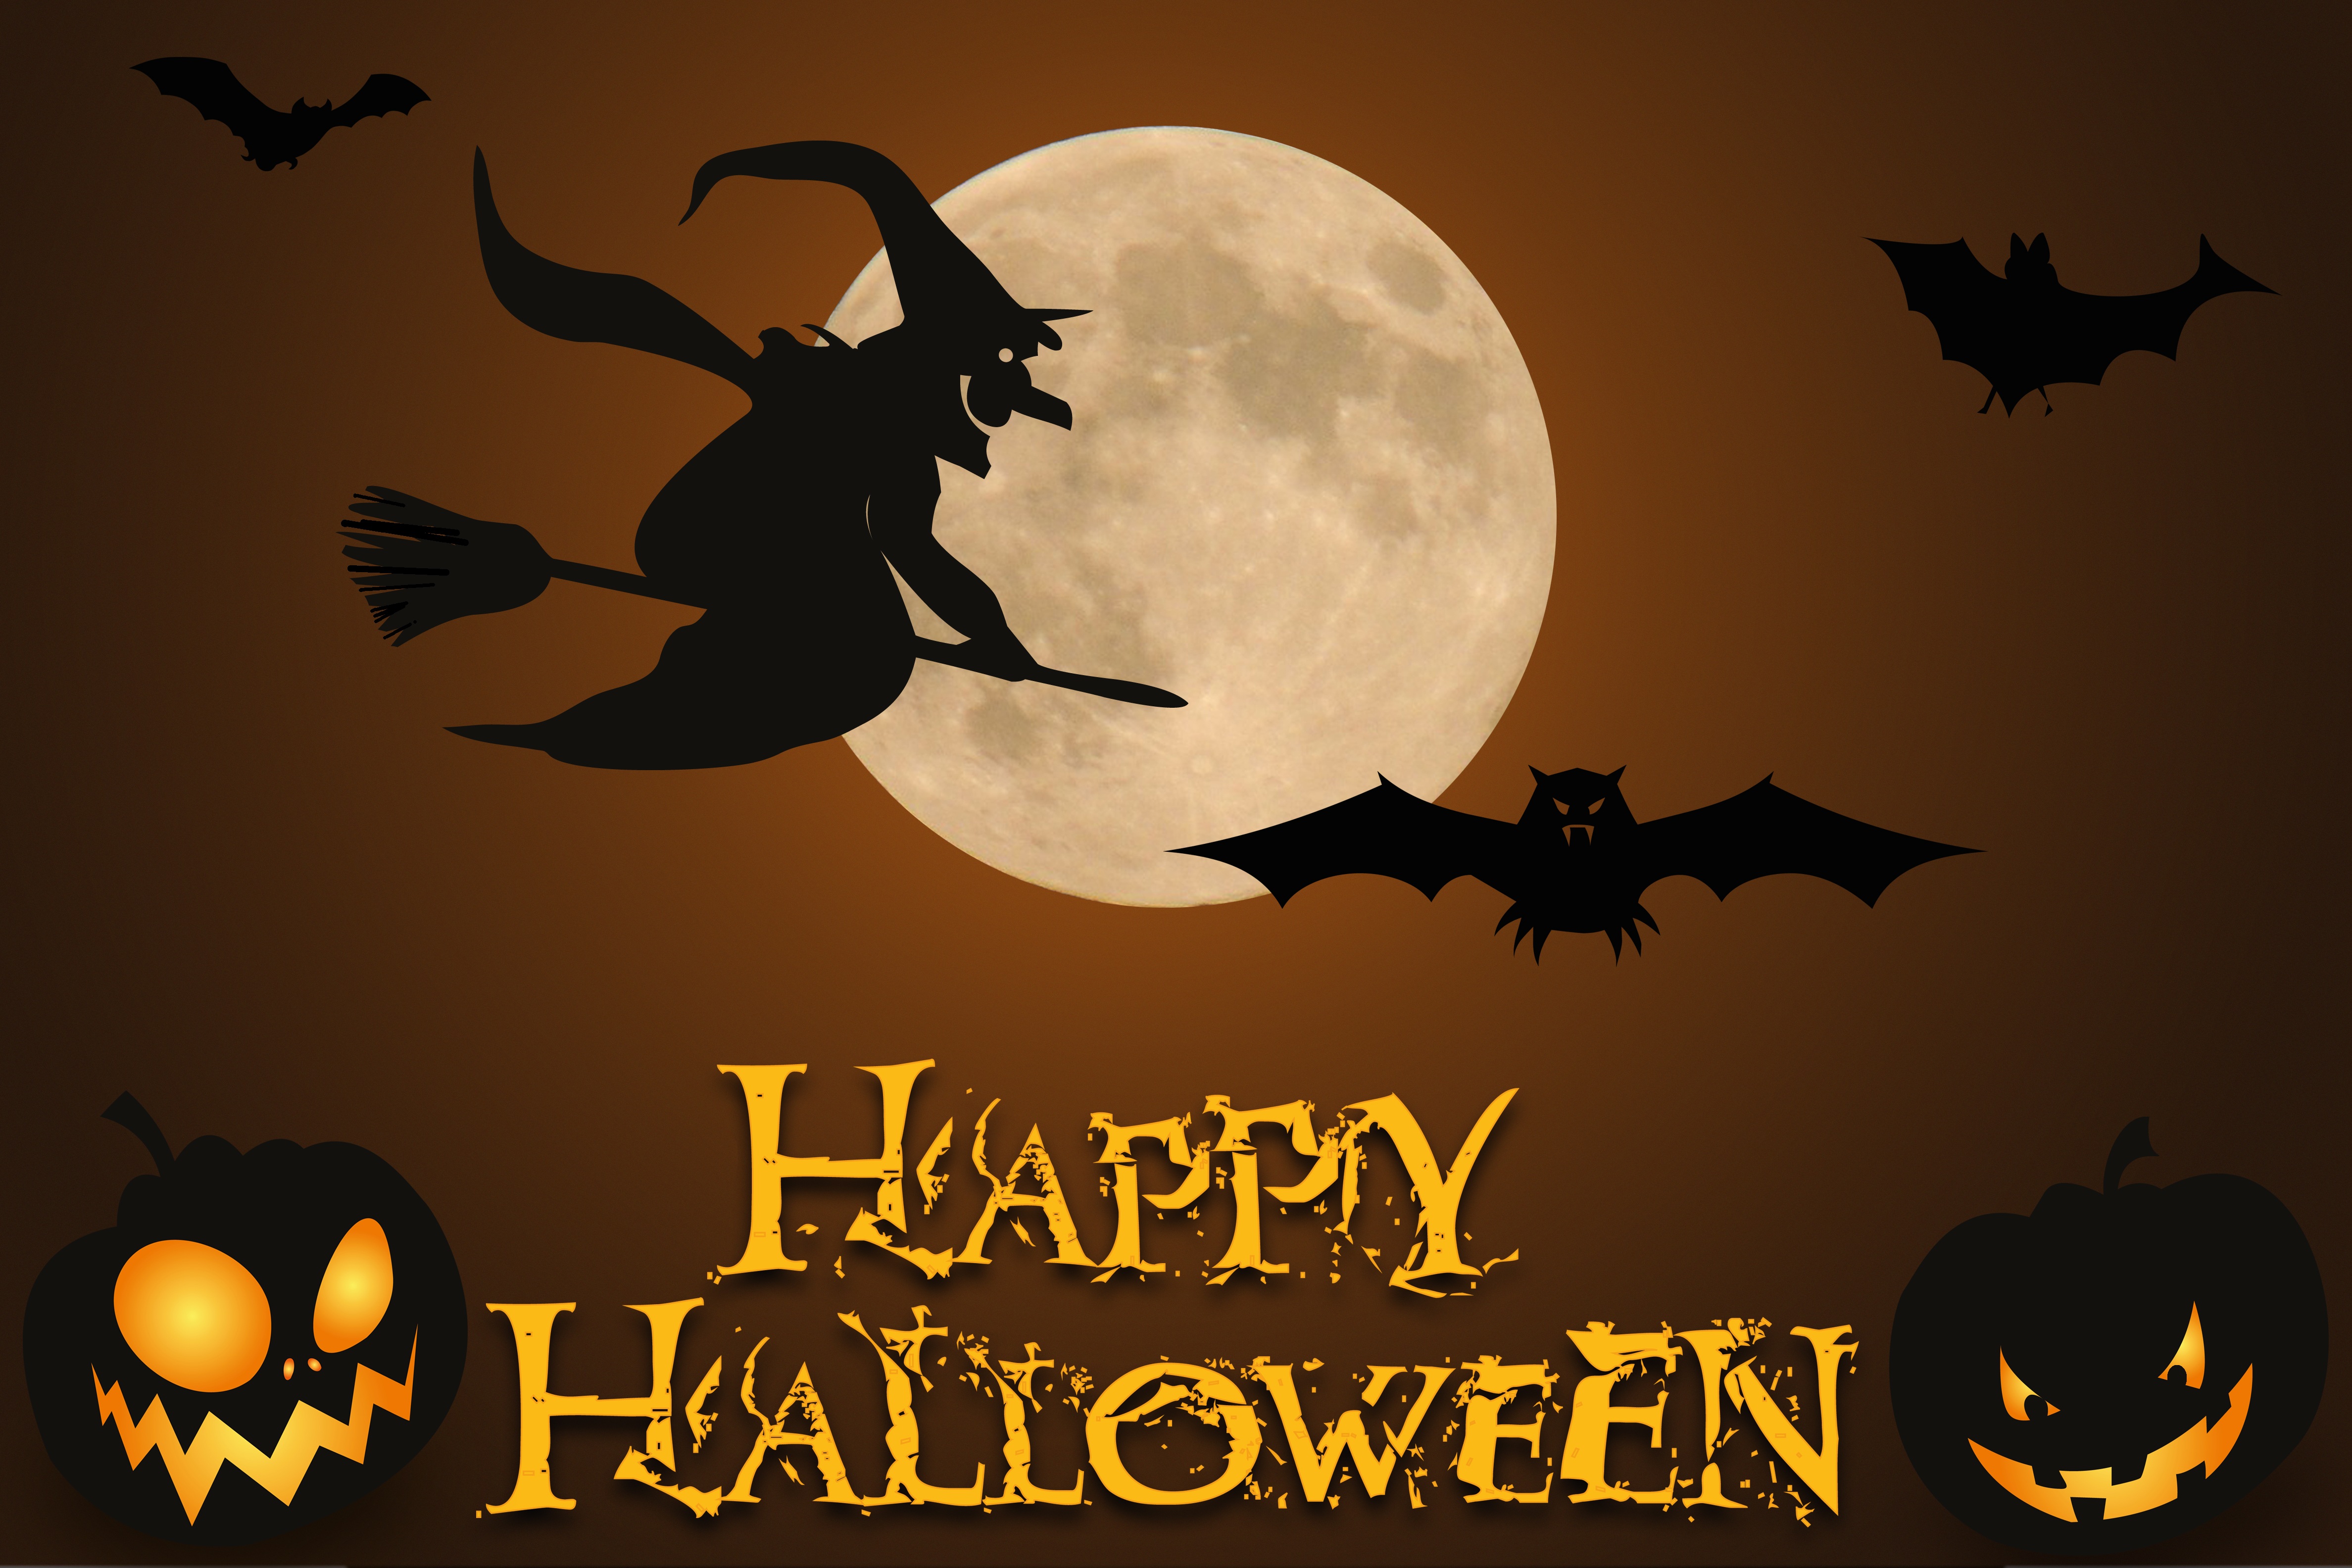 halloween, holiday, bat, happy halloween, jack o' lantern, moon, witch